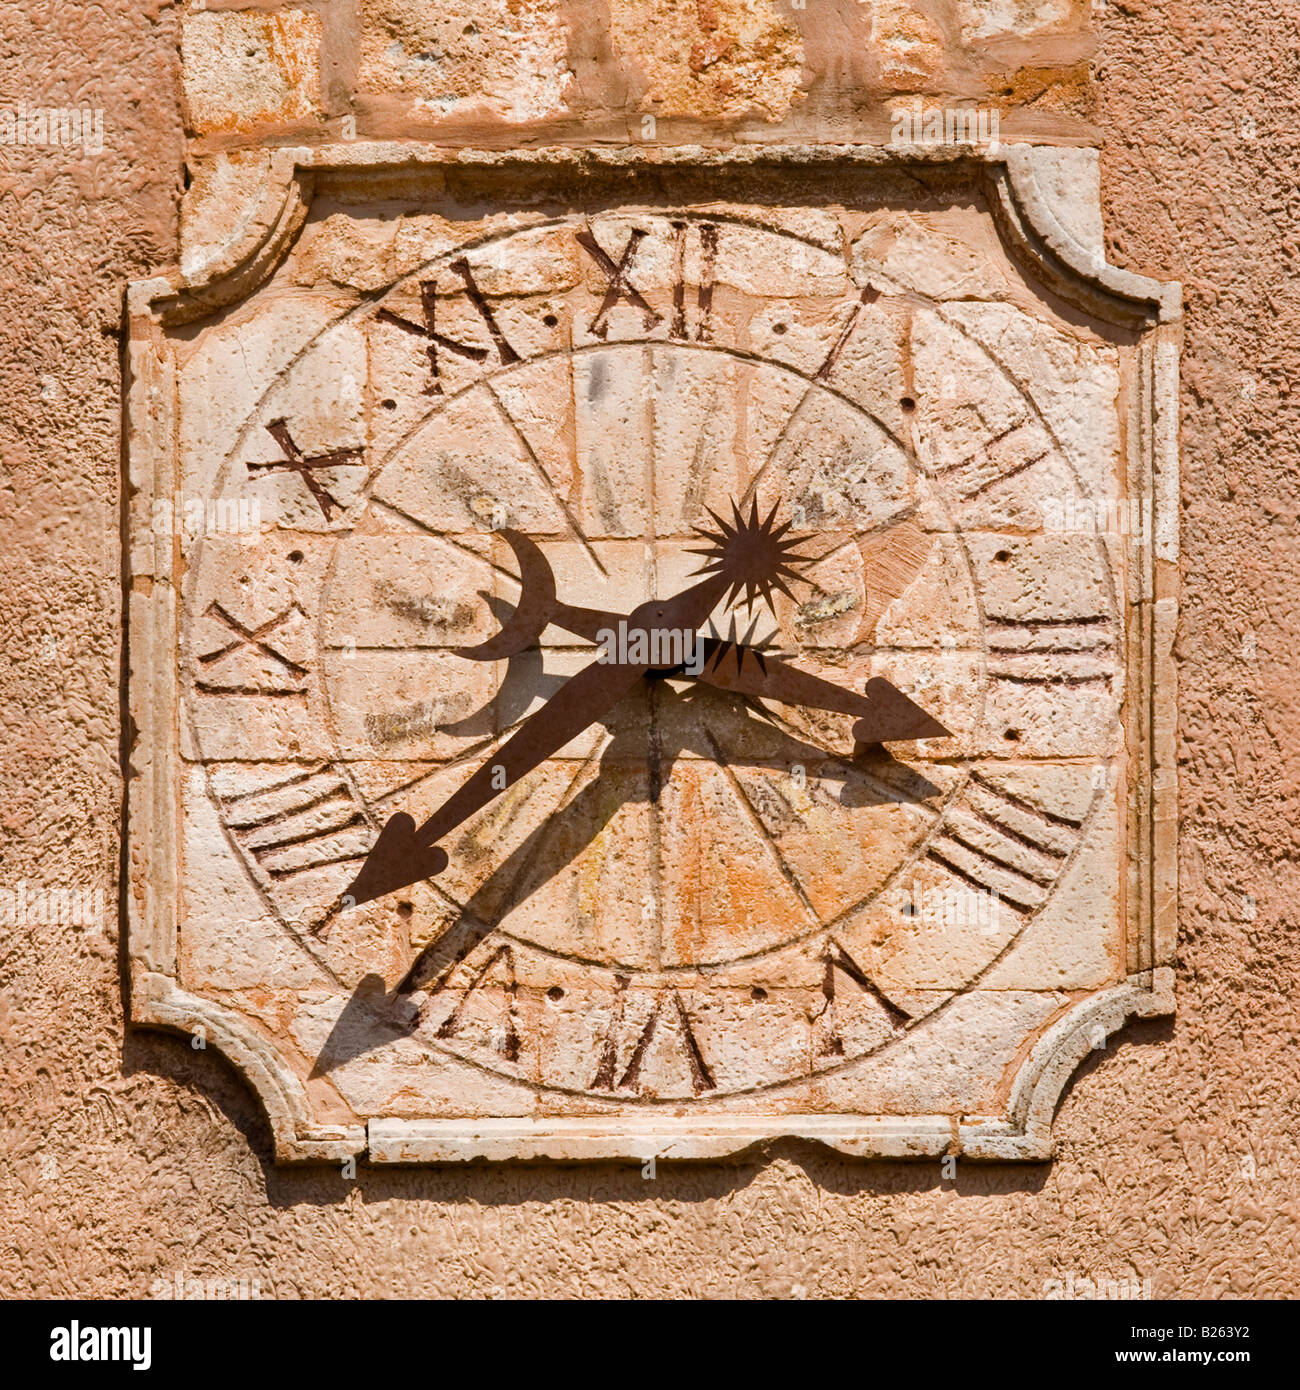 Kirche clock Roussillon provence frankreich Stockfoto